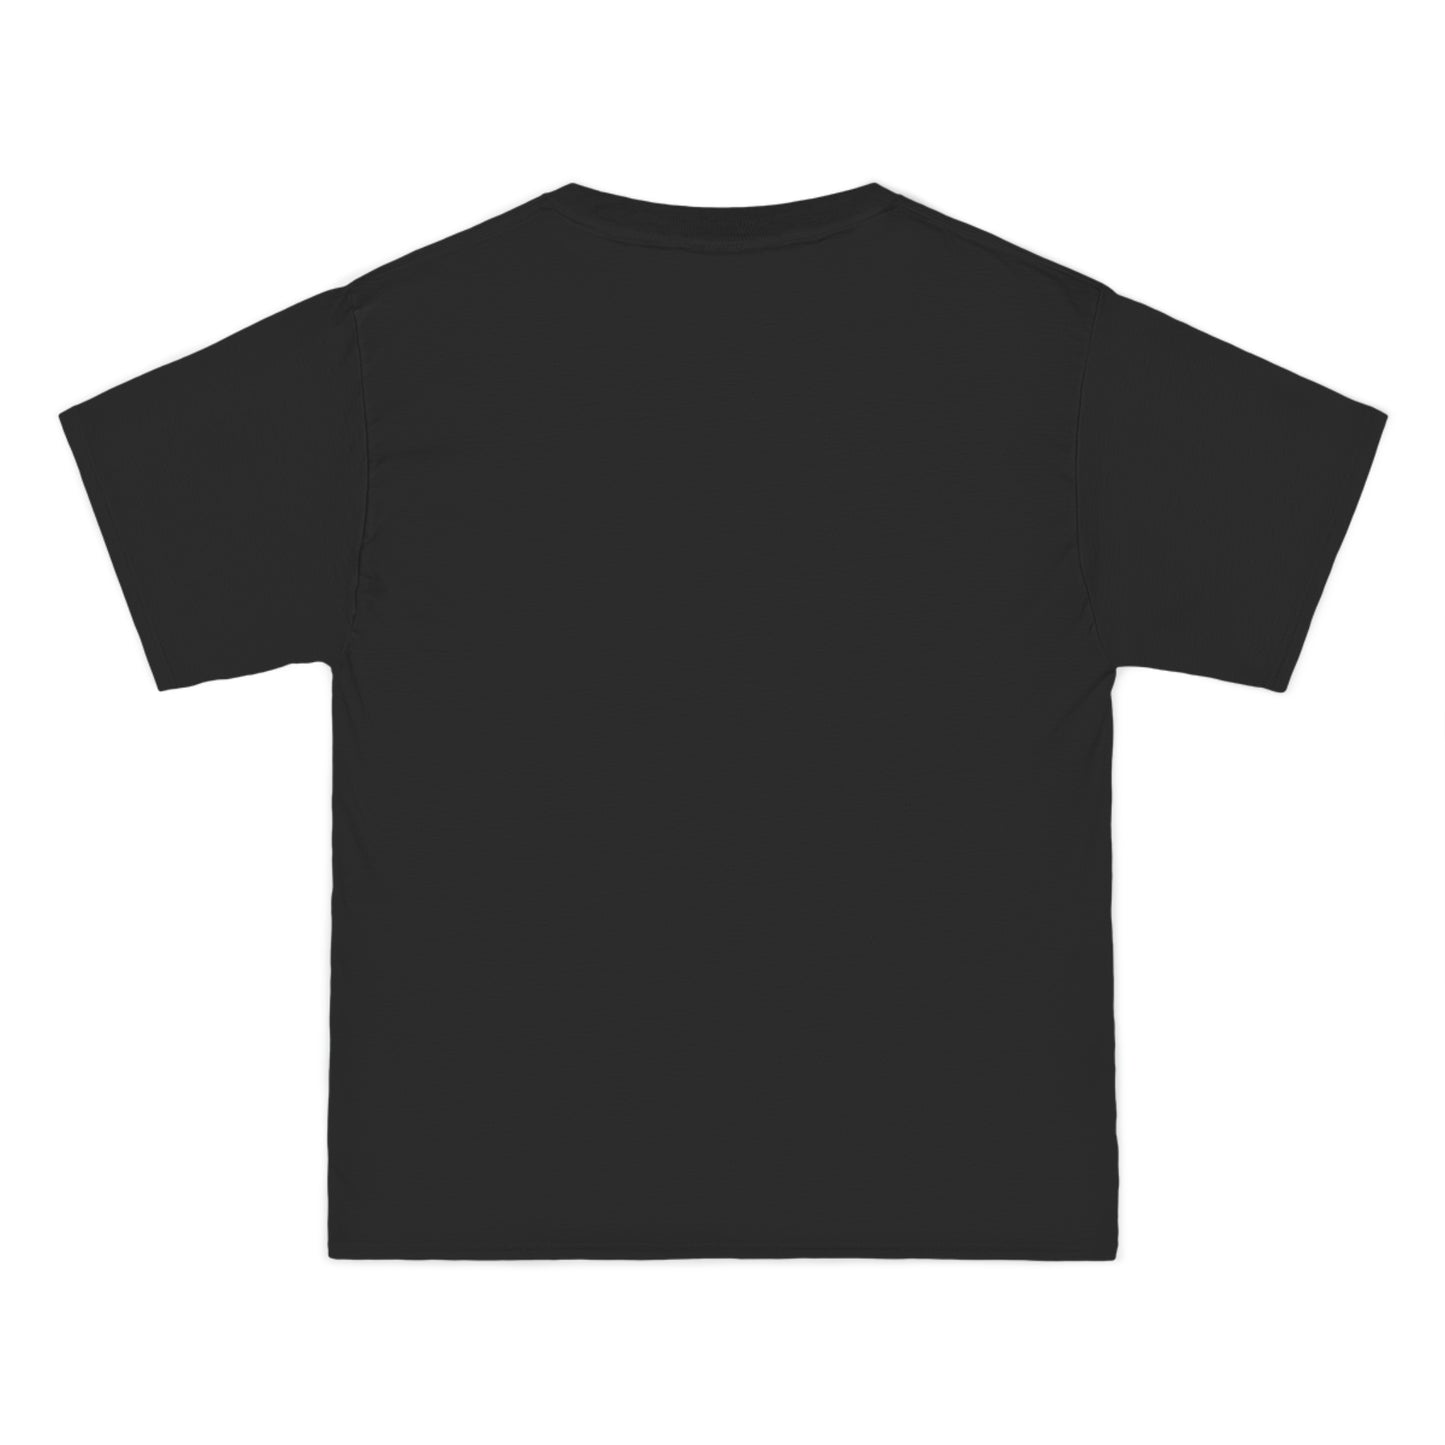 Hola Beefy-T®  Short-Sleeve T-Shirt